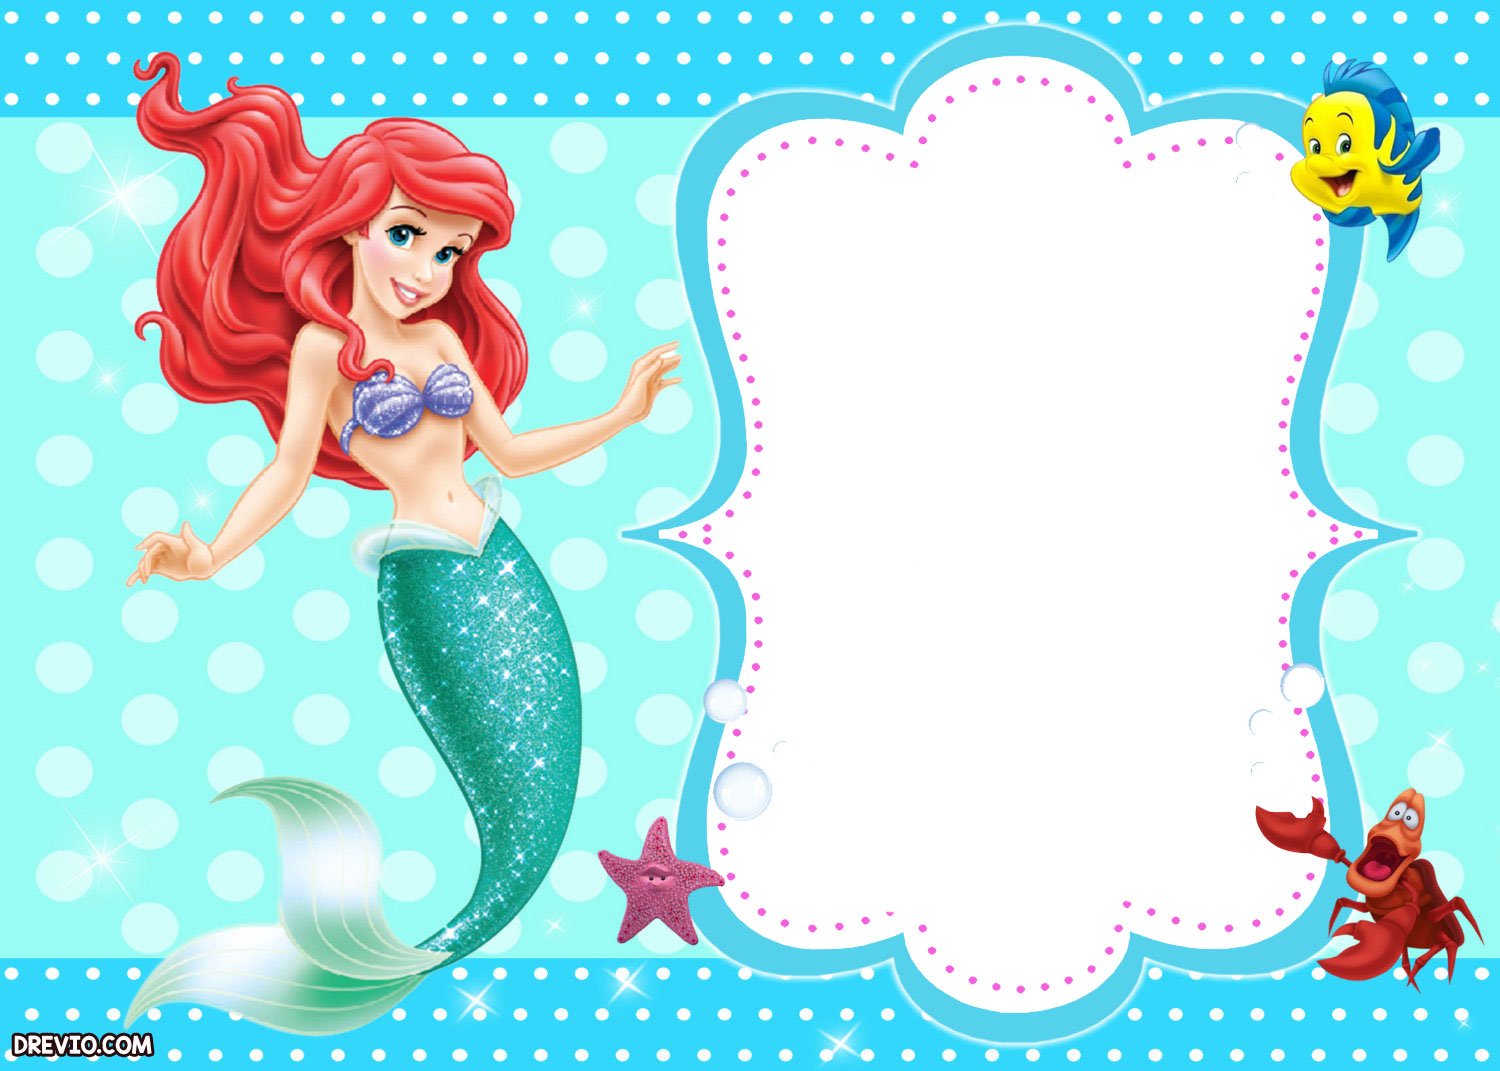 Updated! Free Printable Ariel the Little Mermaid Invitation Template